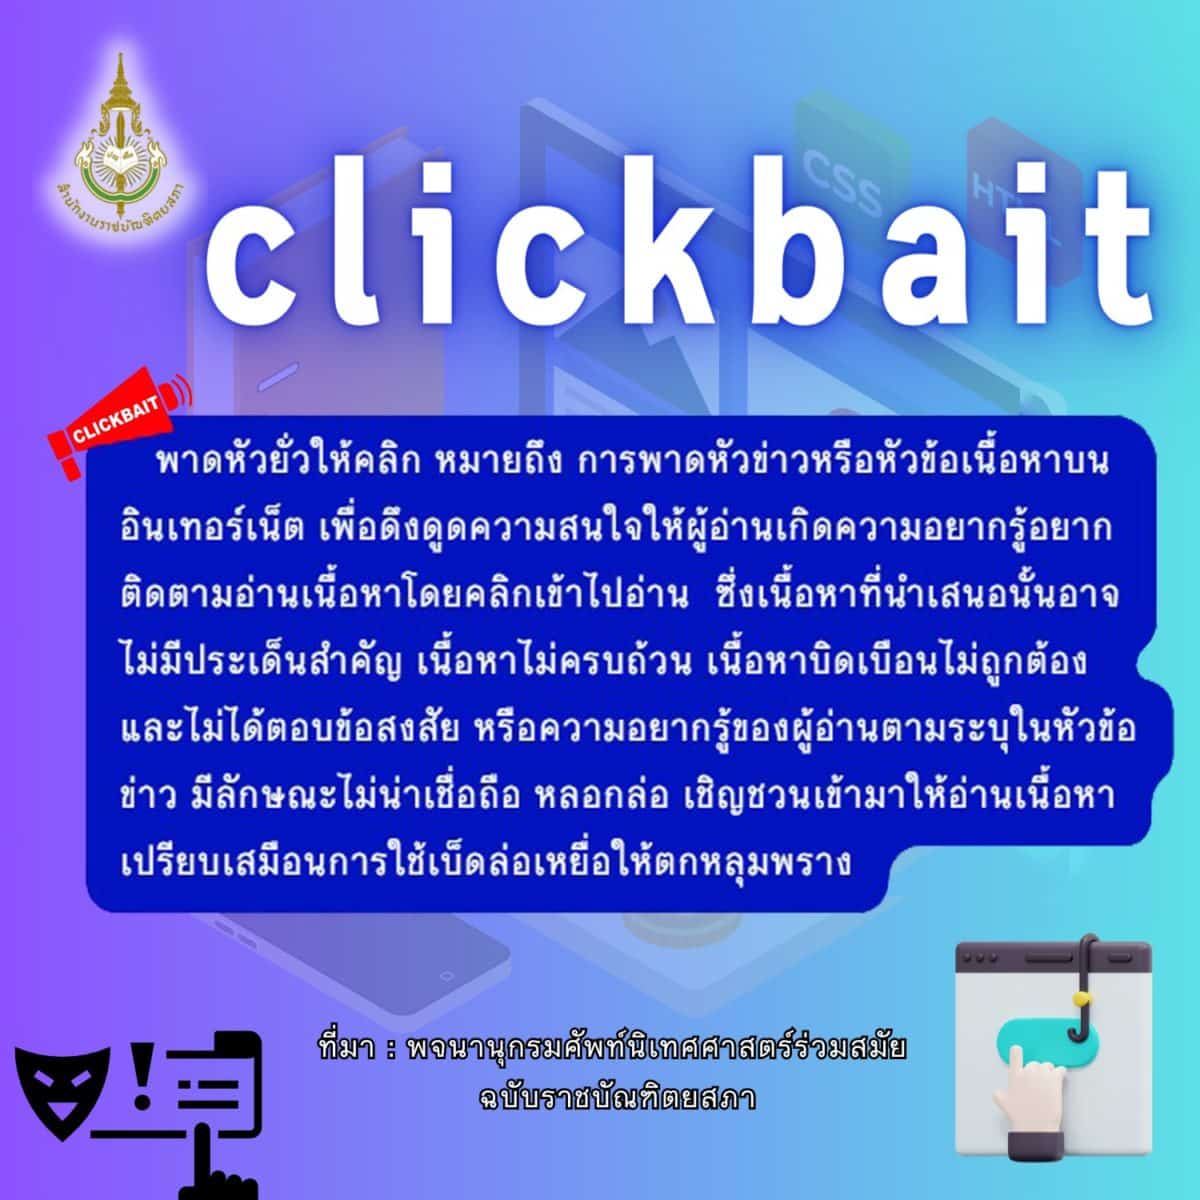 "Clickbait" ราชบัณฑิตฯ บัญญัติภาษาไทยว่า "พาดหัวยั่วให้คลิก"